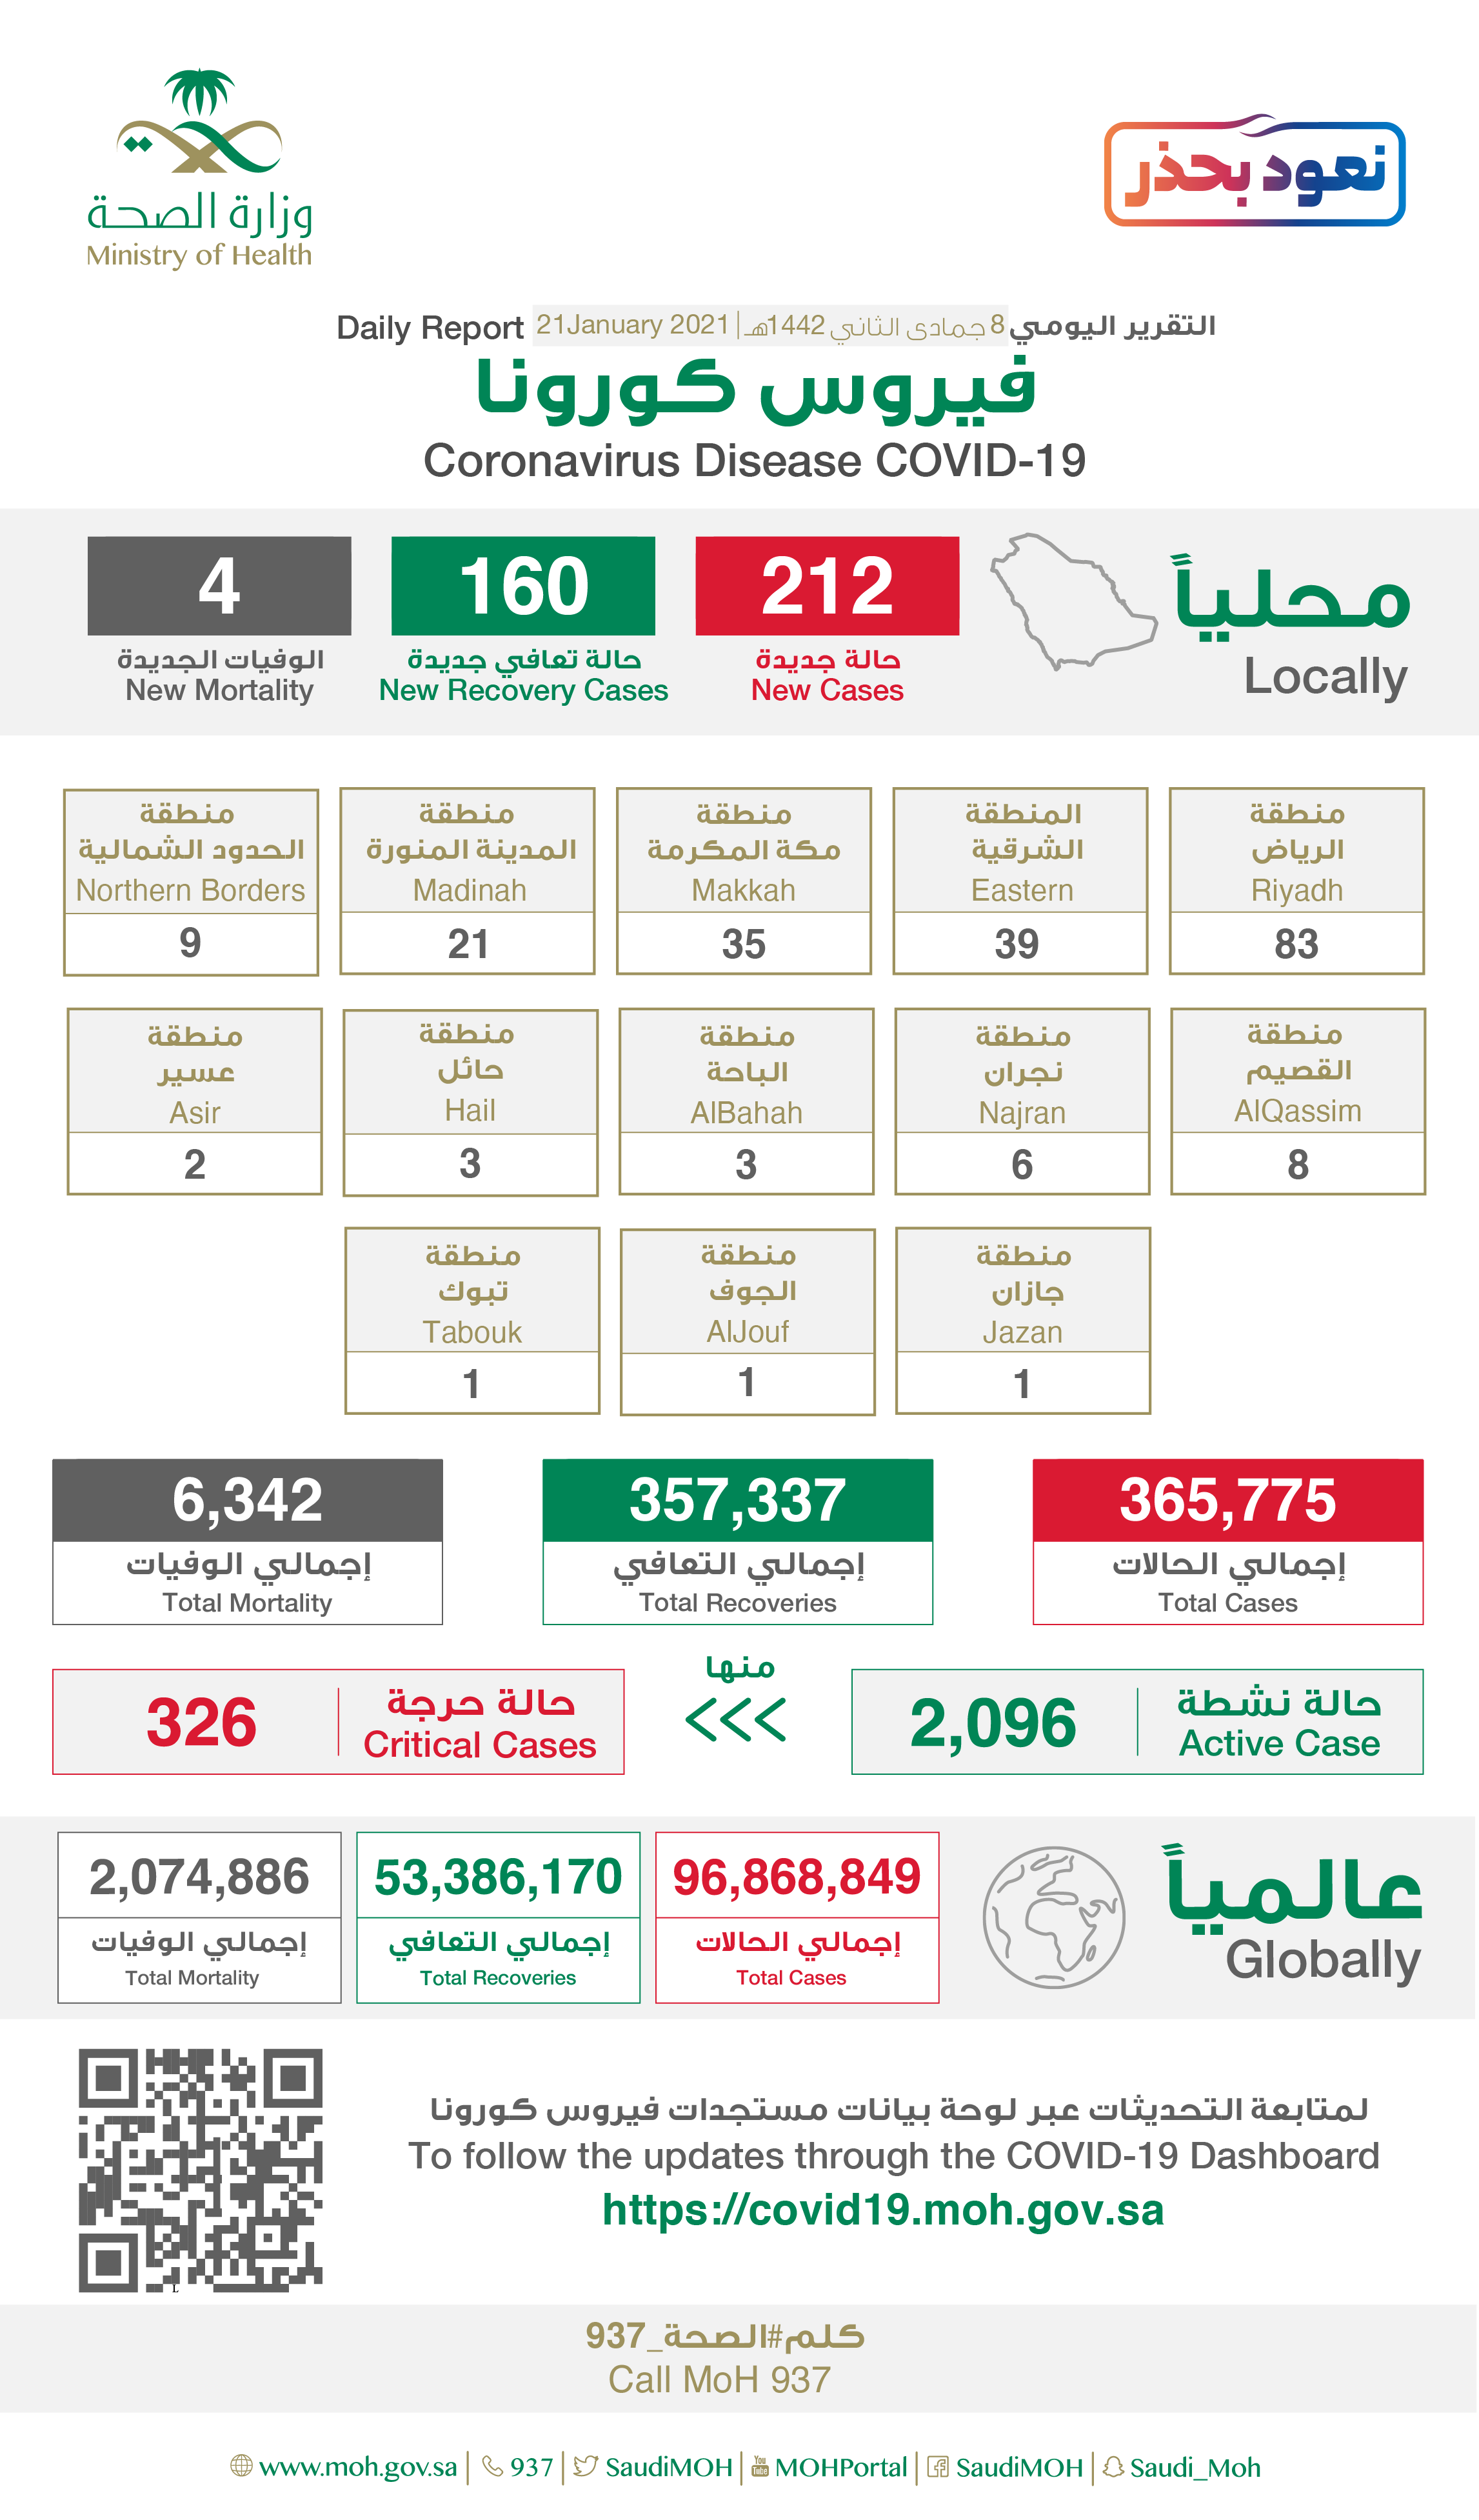 Saudi Arabia Coronavirus : Total Cases :365,775, New Cases : 212 , Cured : 357,337 , Deaths: 6,342, Active Cases : 2,096